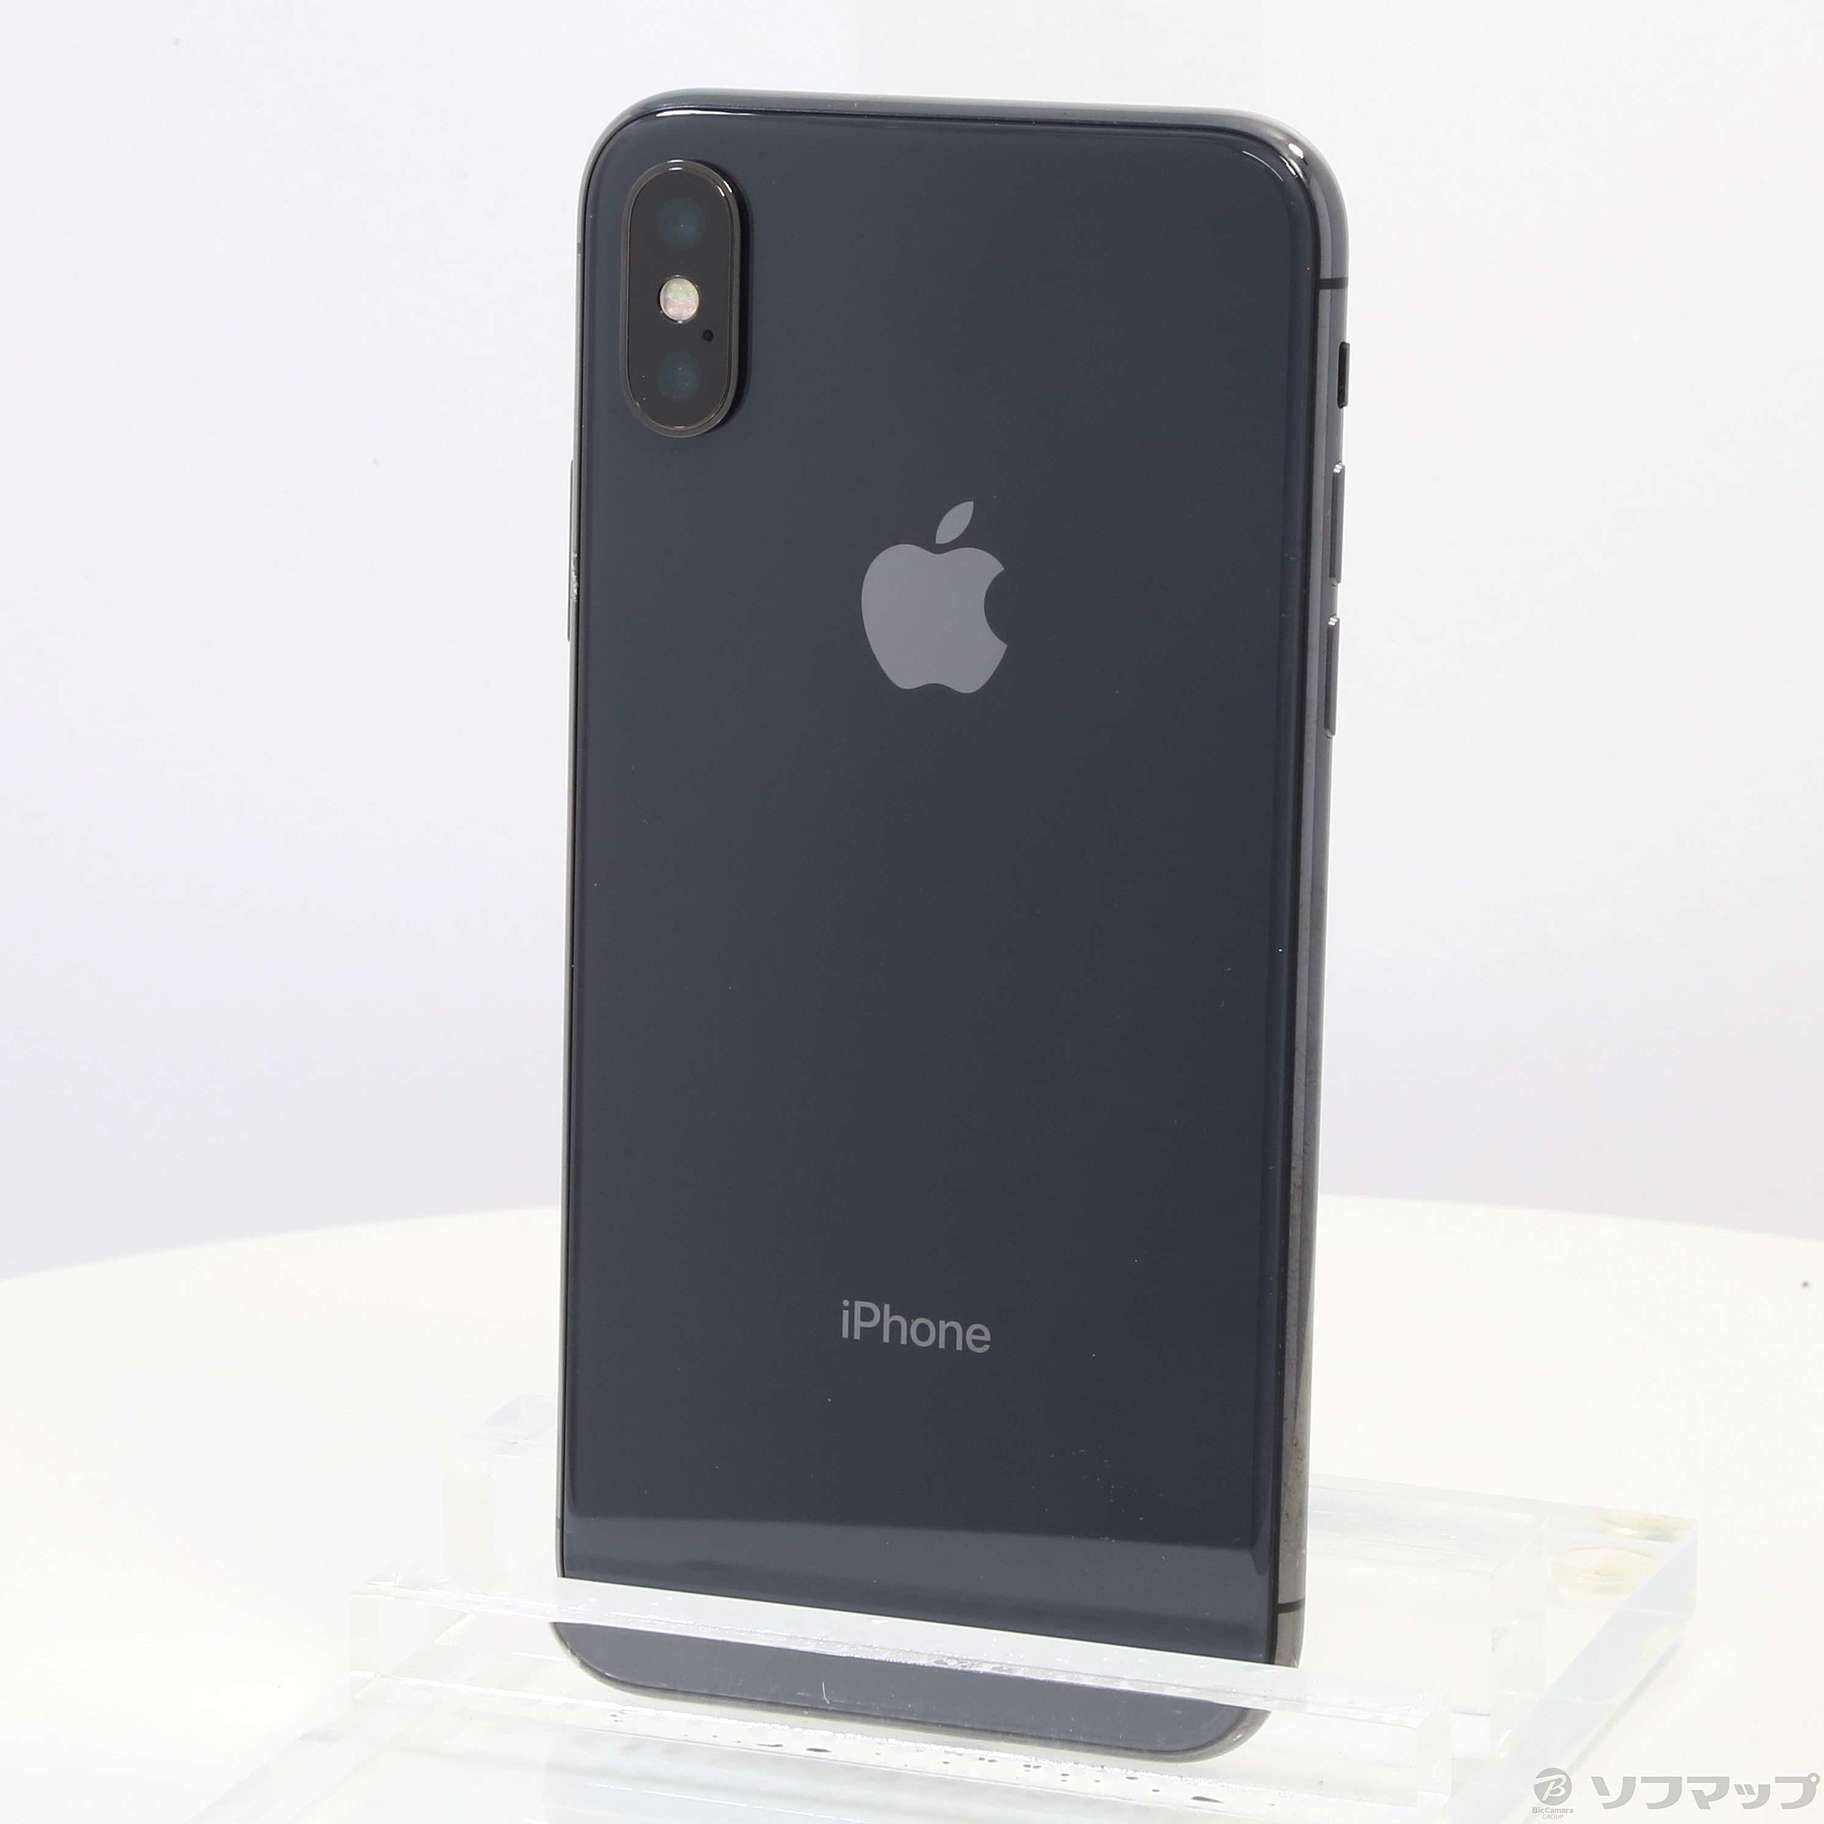 iPhone X スペースグレイ256GB 最終値下げ - www.elsahariano.com